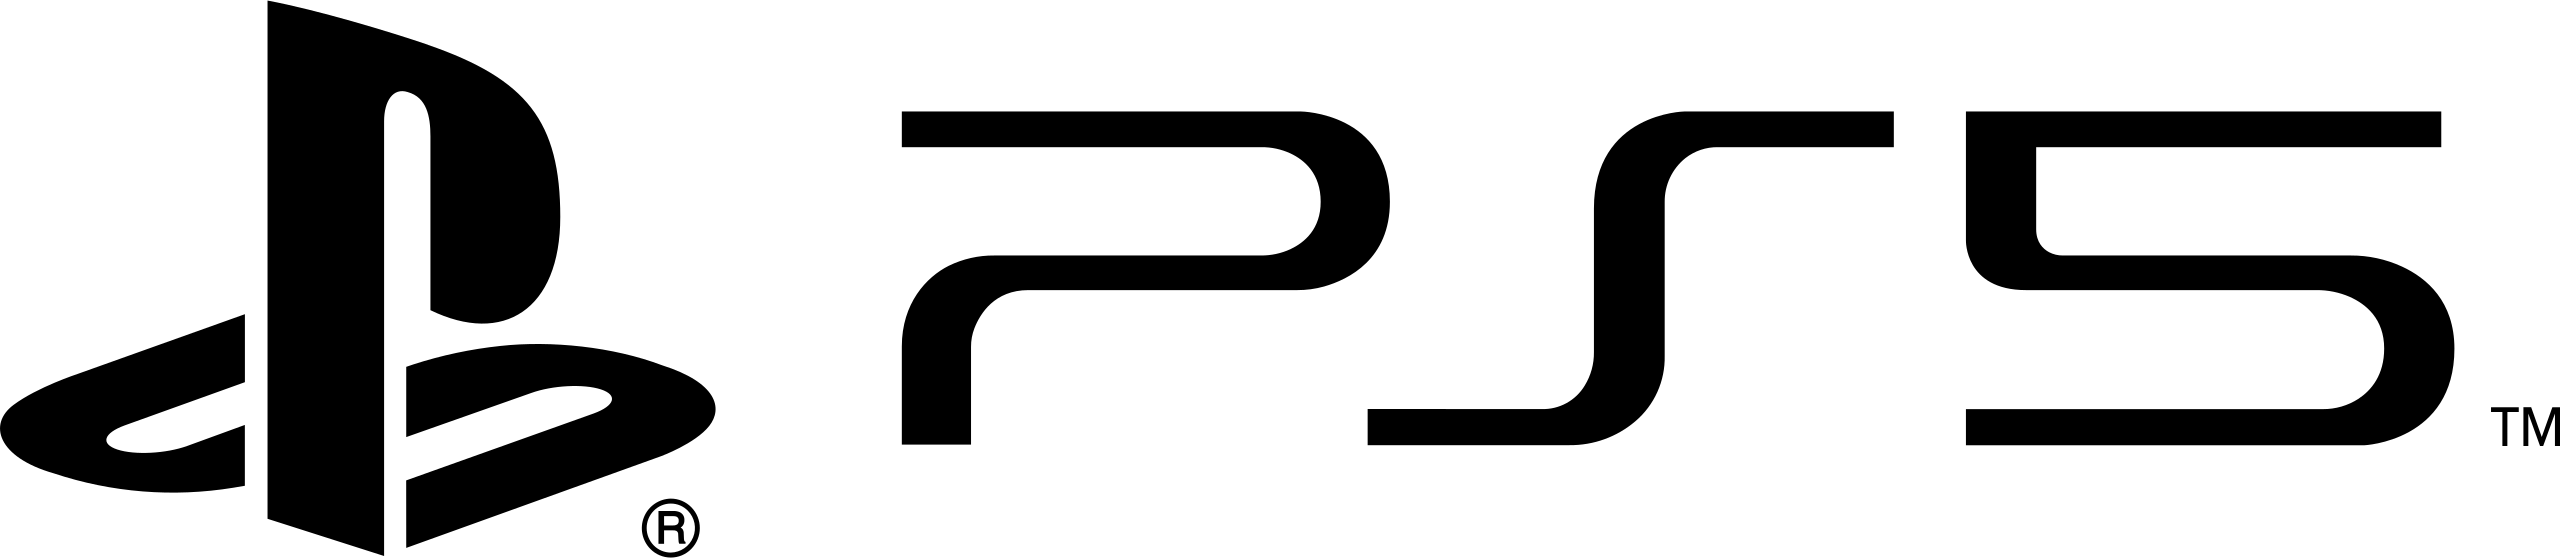 PS5 Logo black